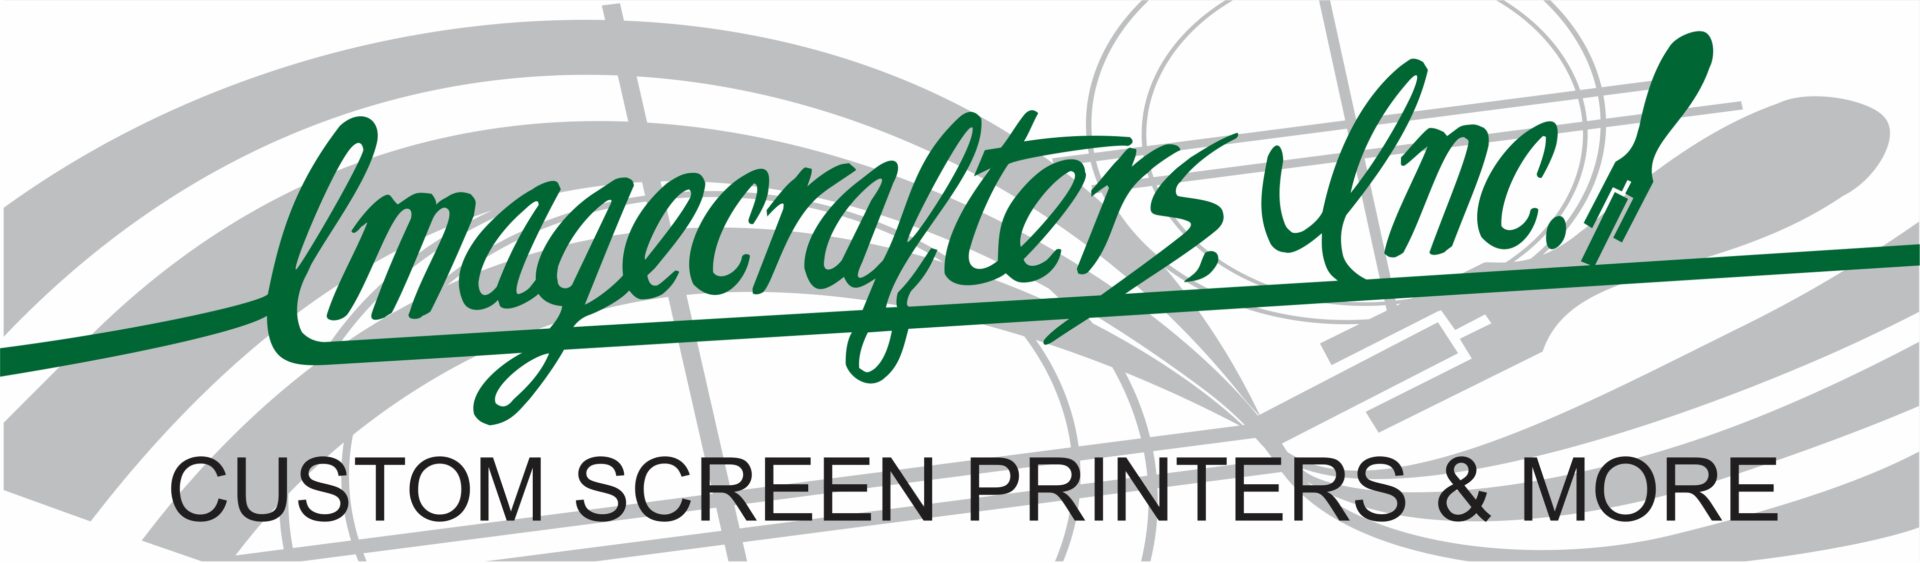 ImageCrafters Inc Logo